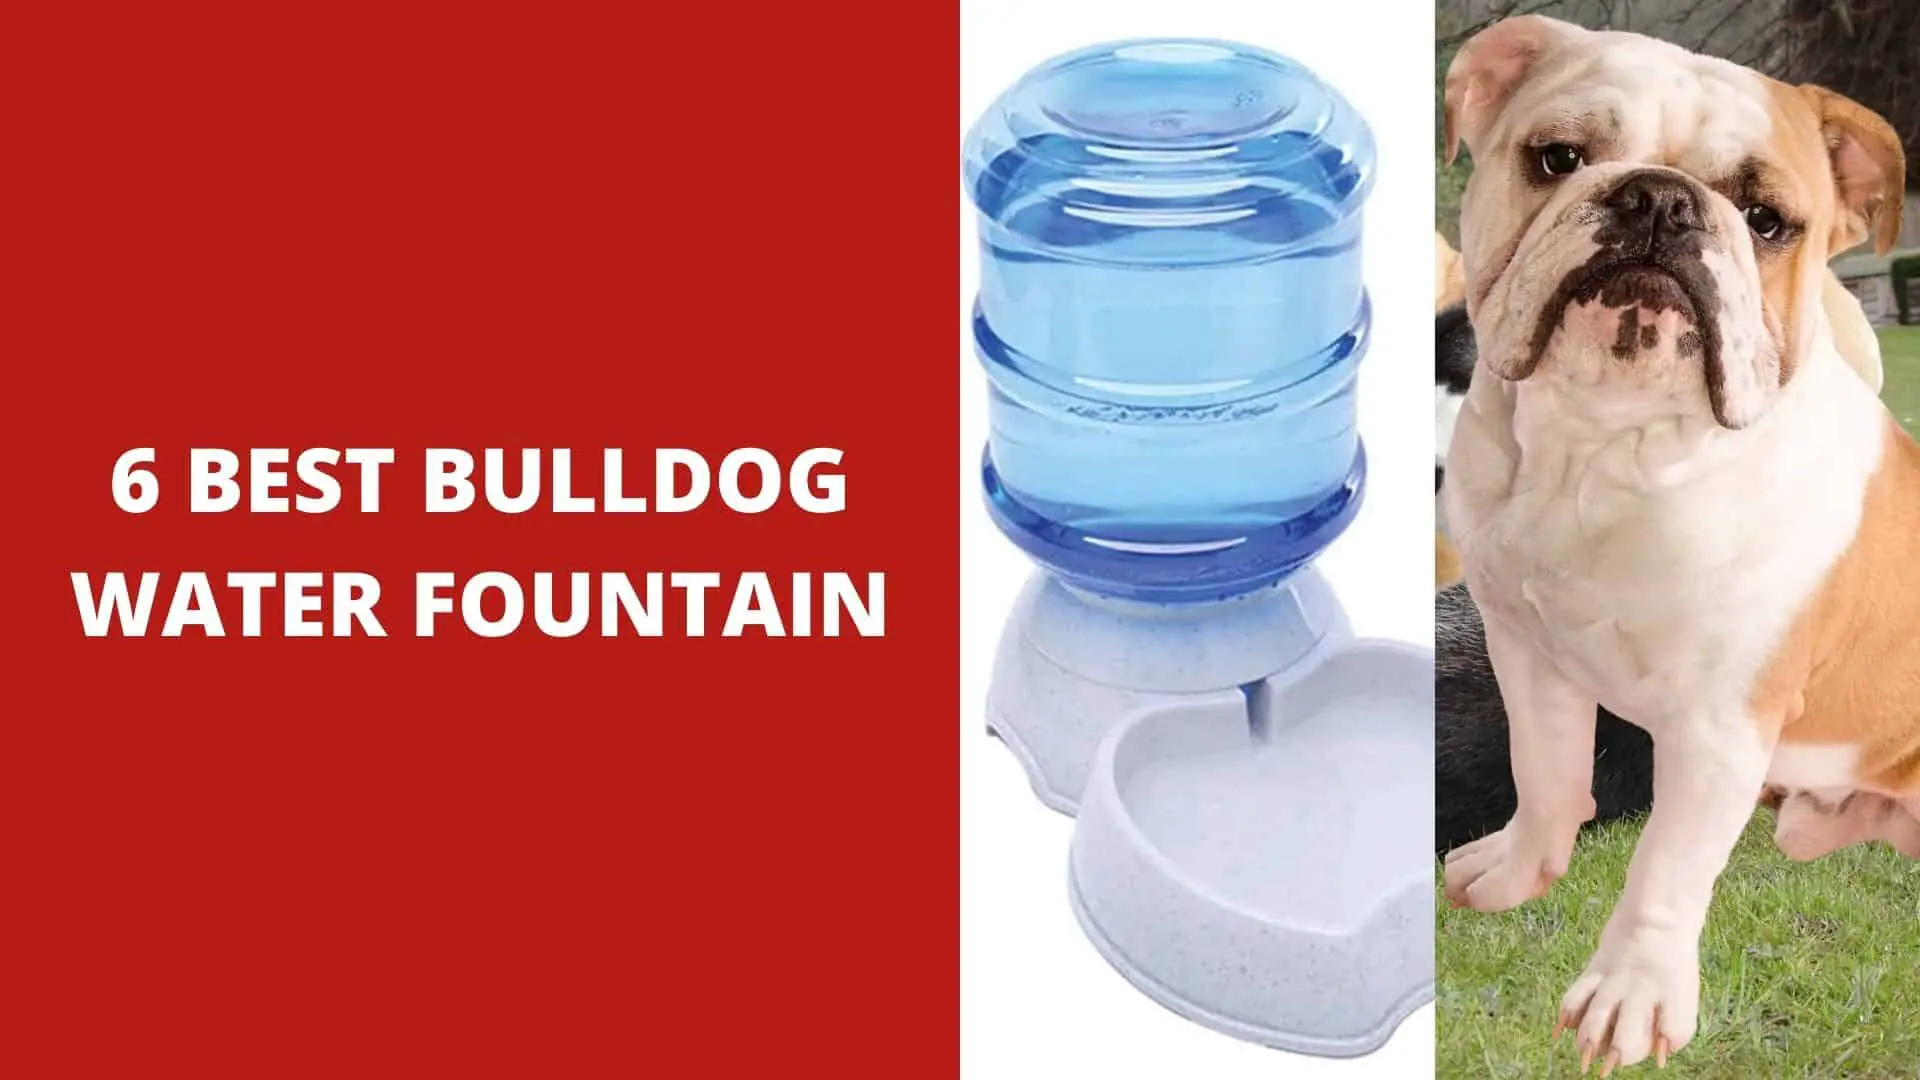 6 Best Bulldog Water Fountain